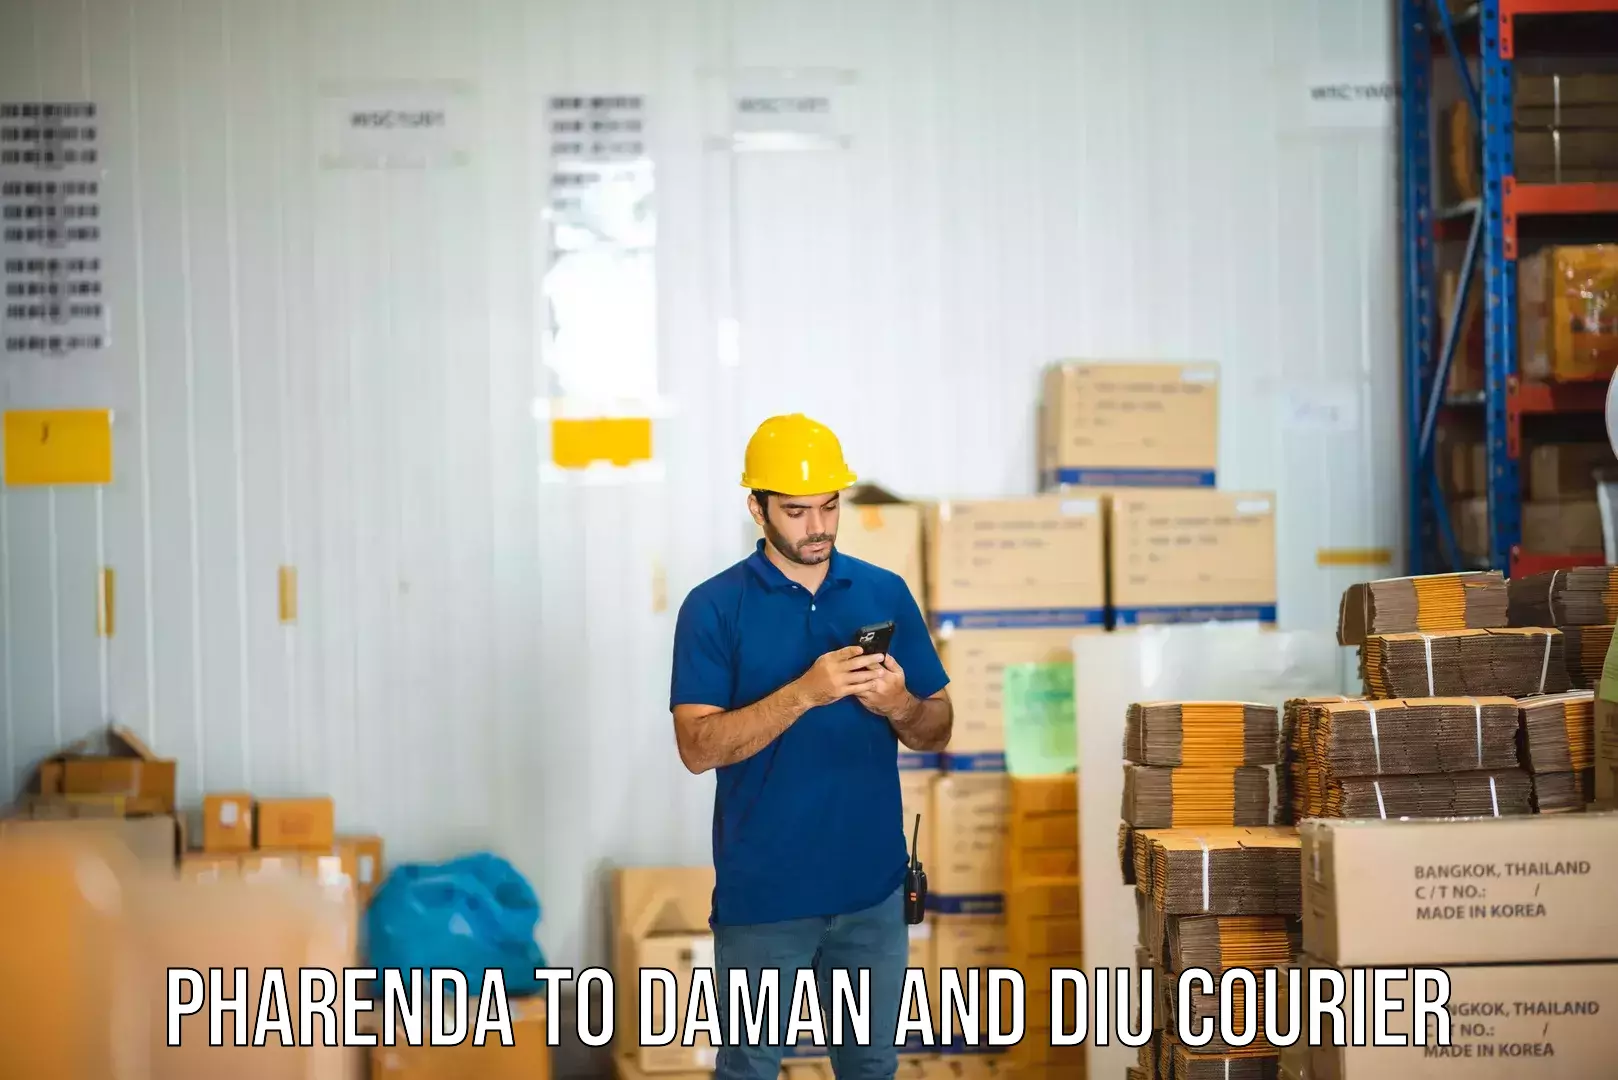 On-call courier service Pharenda to Daman and Diu